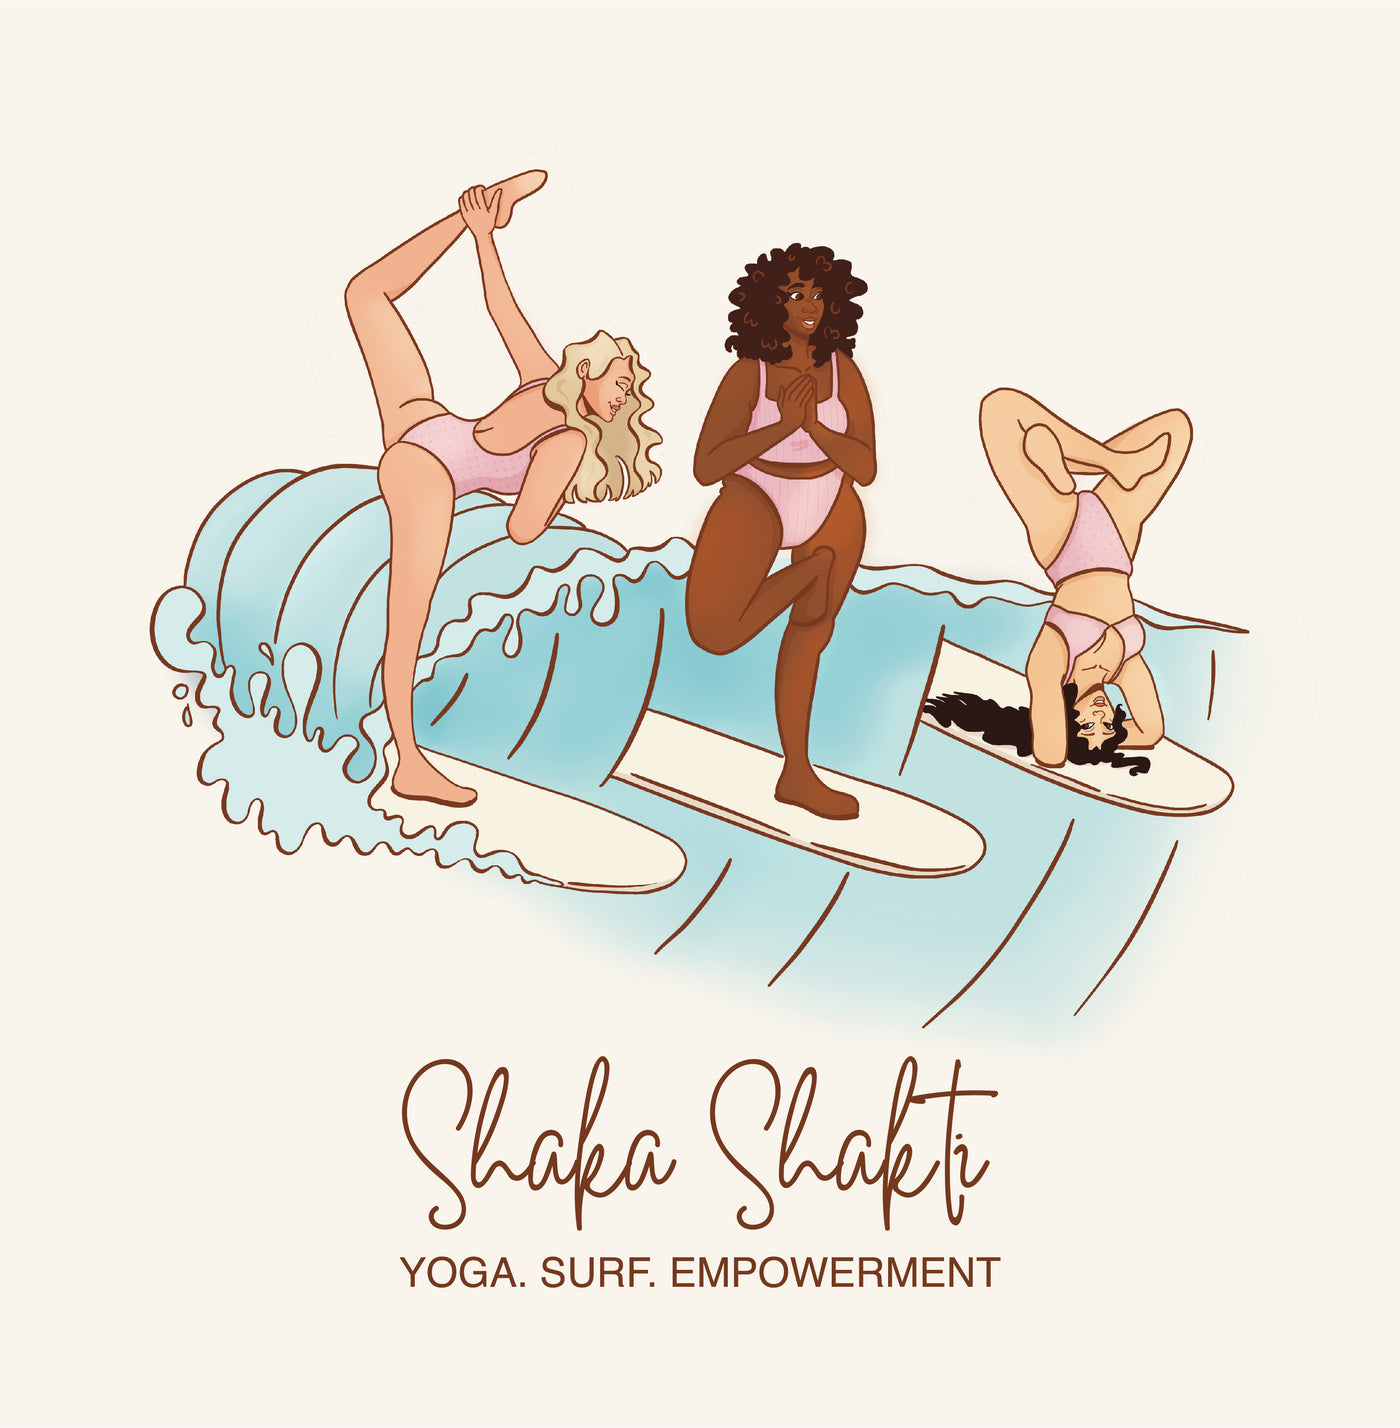 Shaka Shakti Art | Yoga Babes on a Wave | Poster